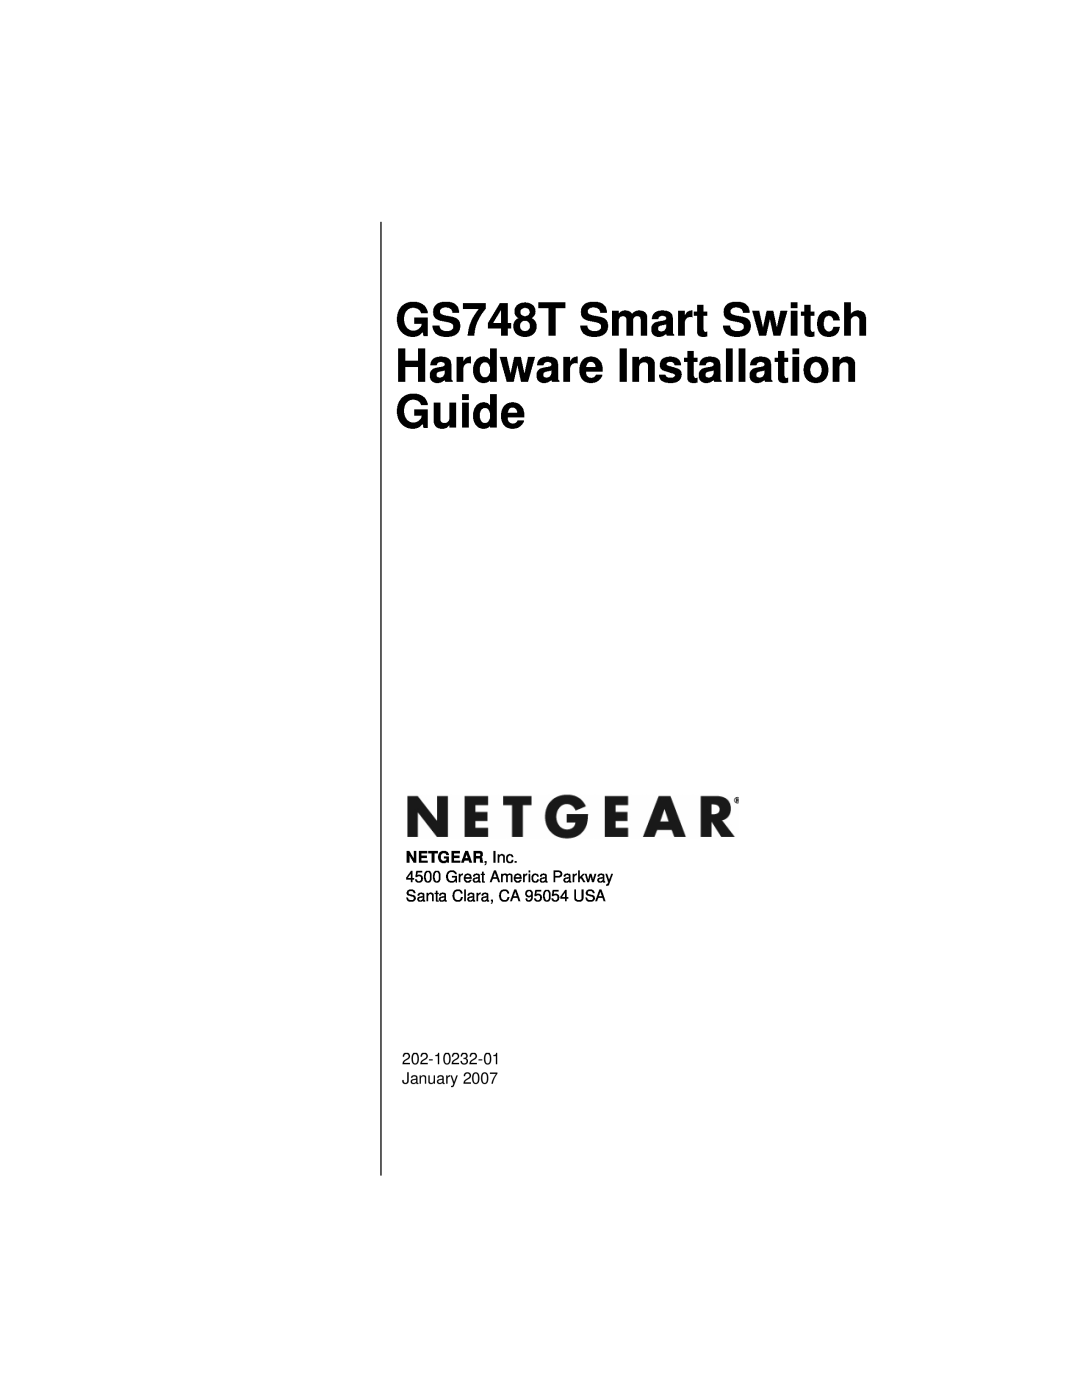 NETGEAR manual GS748T Smart Switch Hardware Installation Guide, NETGEAR, Inc 